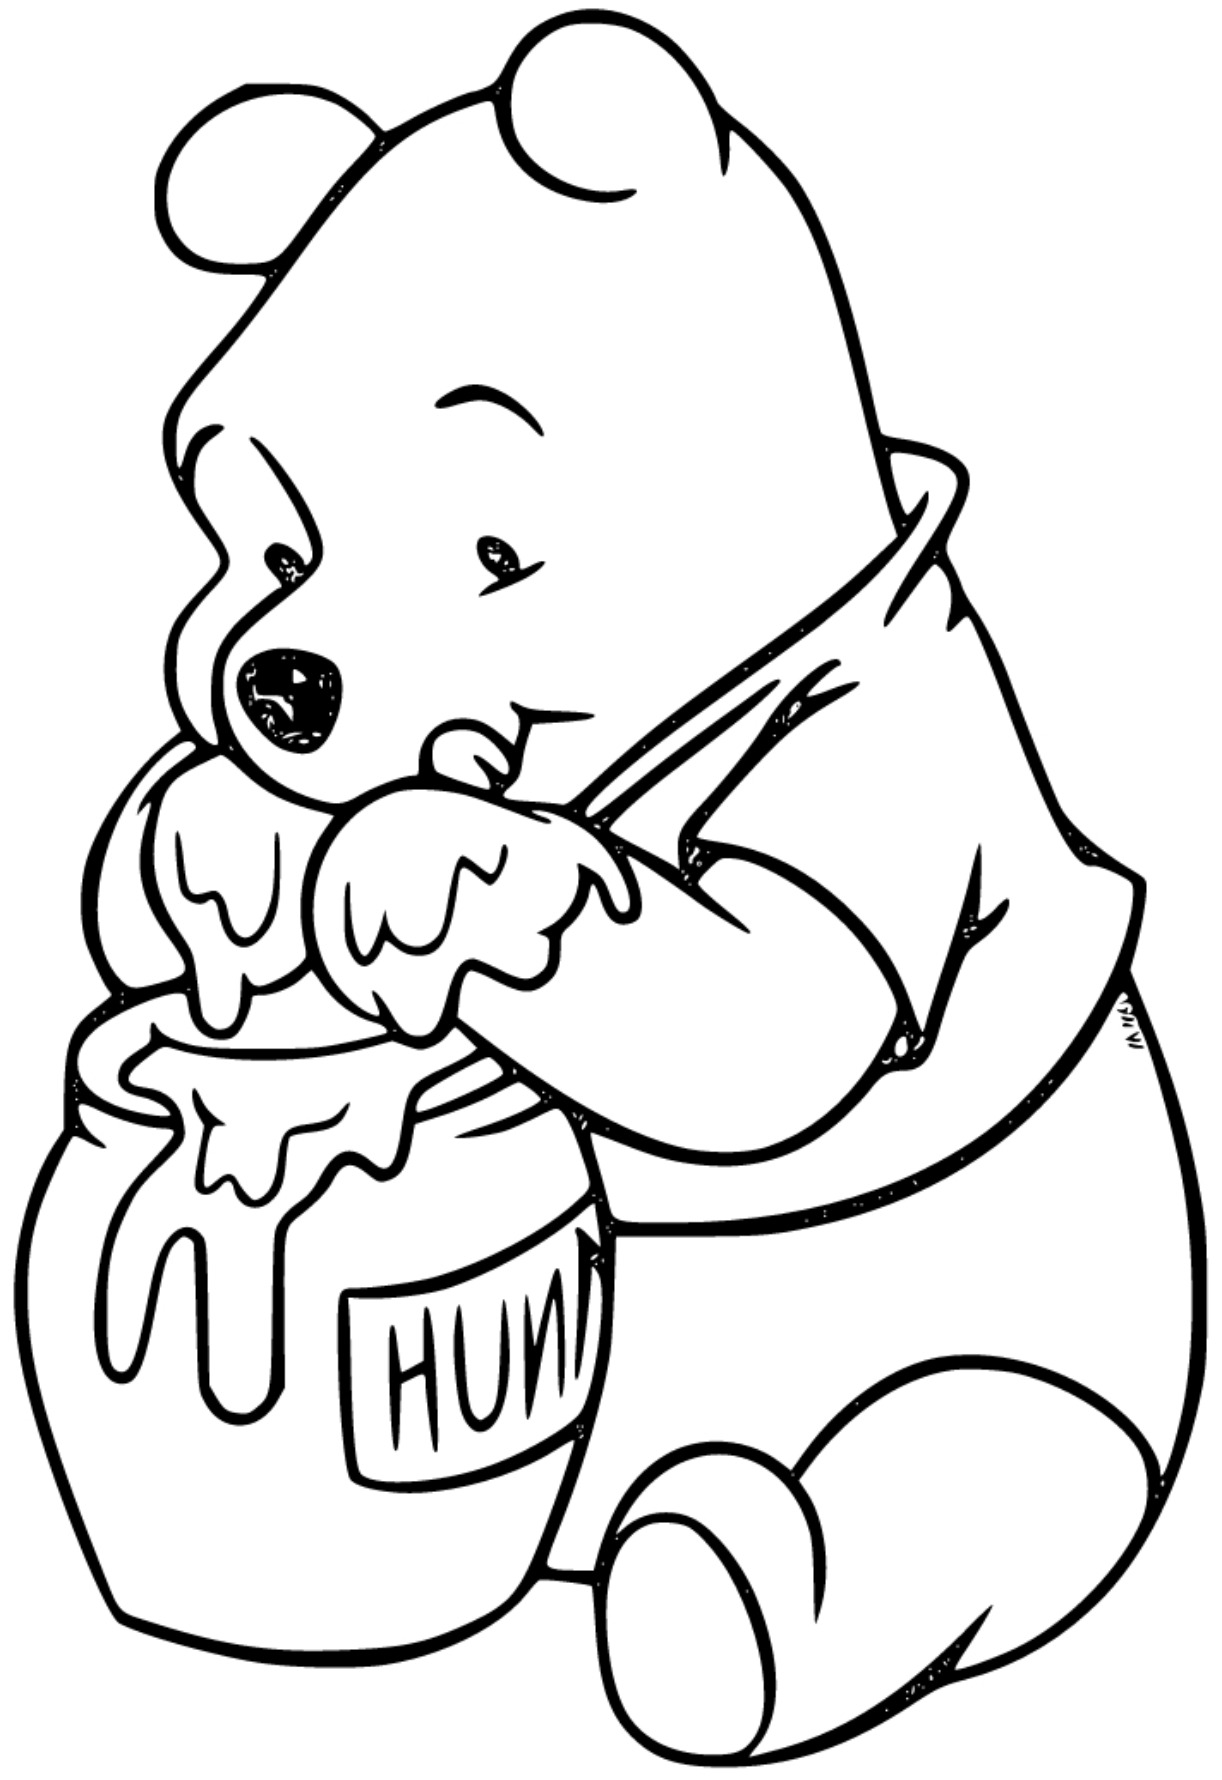 Winnie The Pooh Eating Honey drawing page - SheetalColor.com